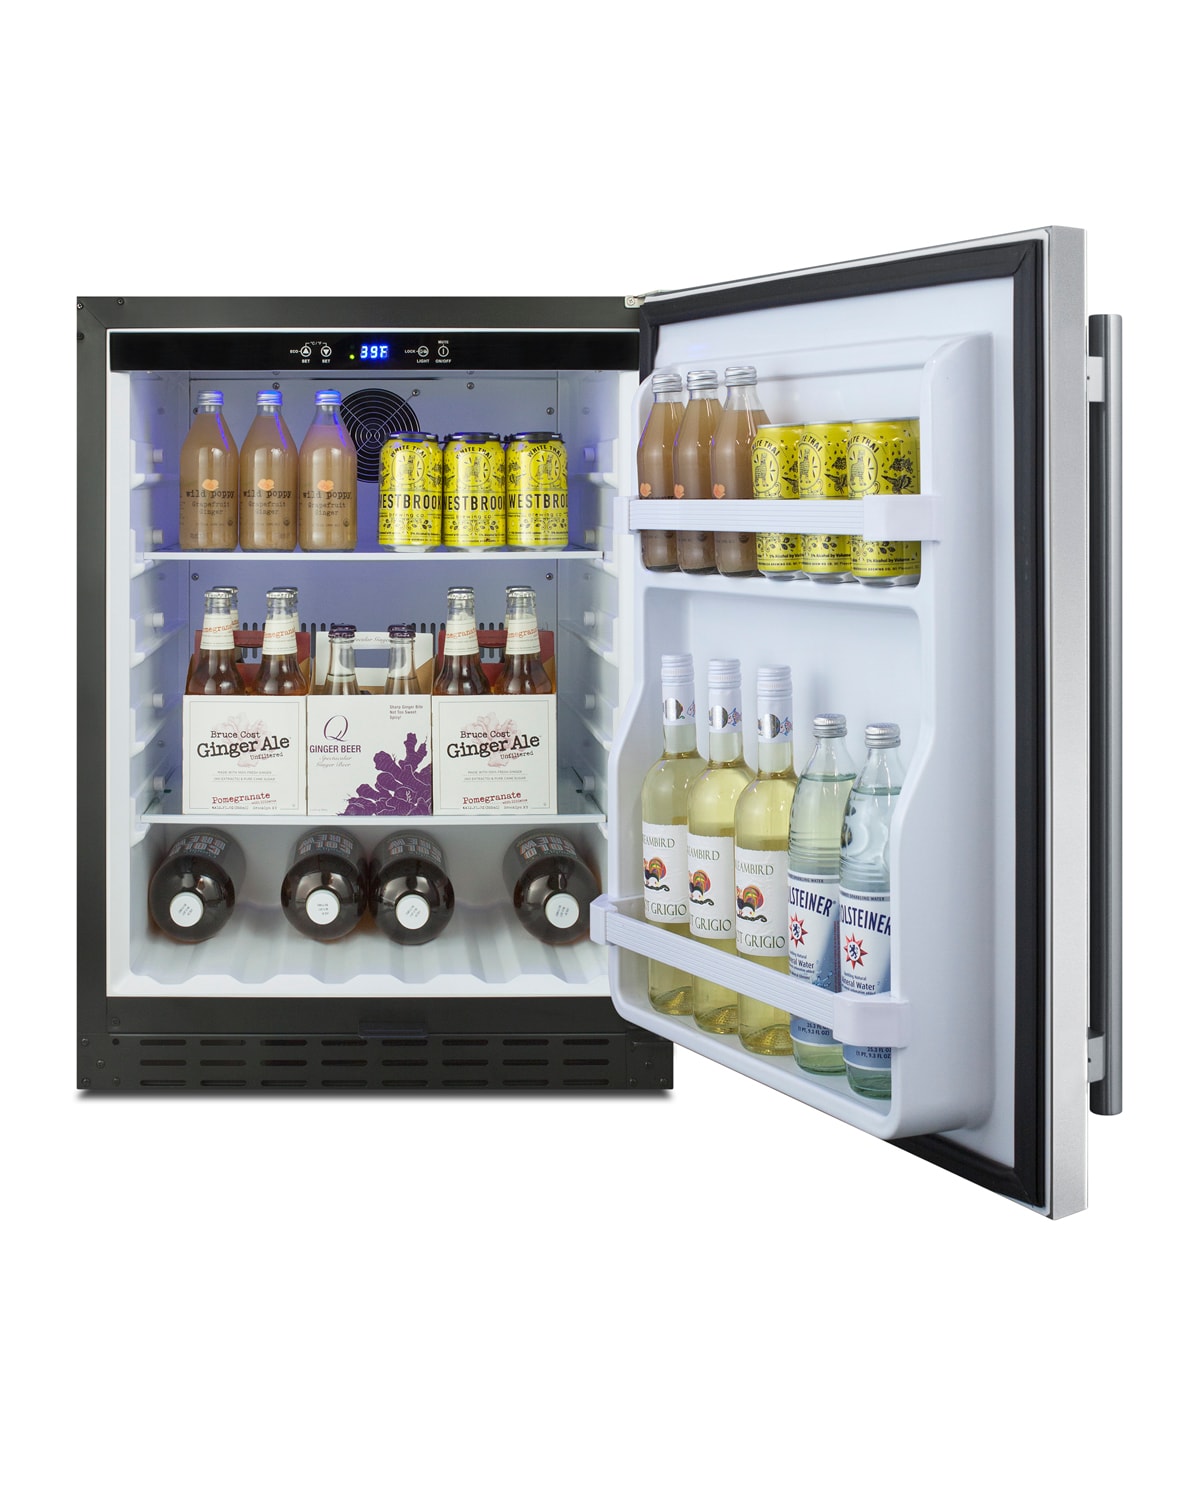 Summit Appliance 36 in. 5.8 cu. ft. Built-In Mini Refrigerator in